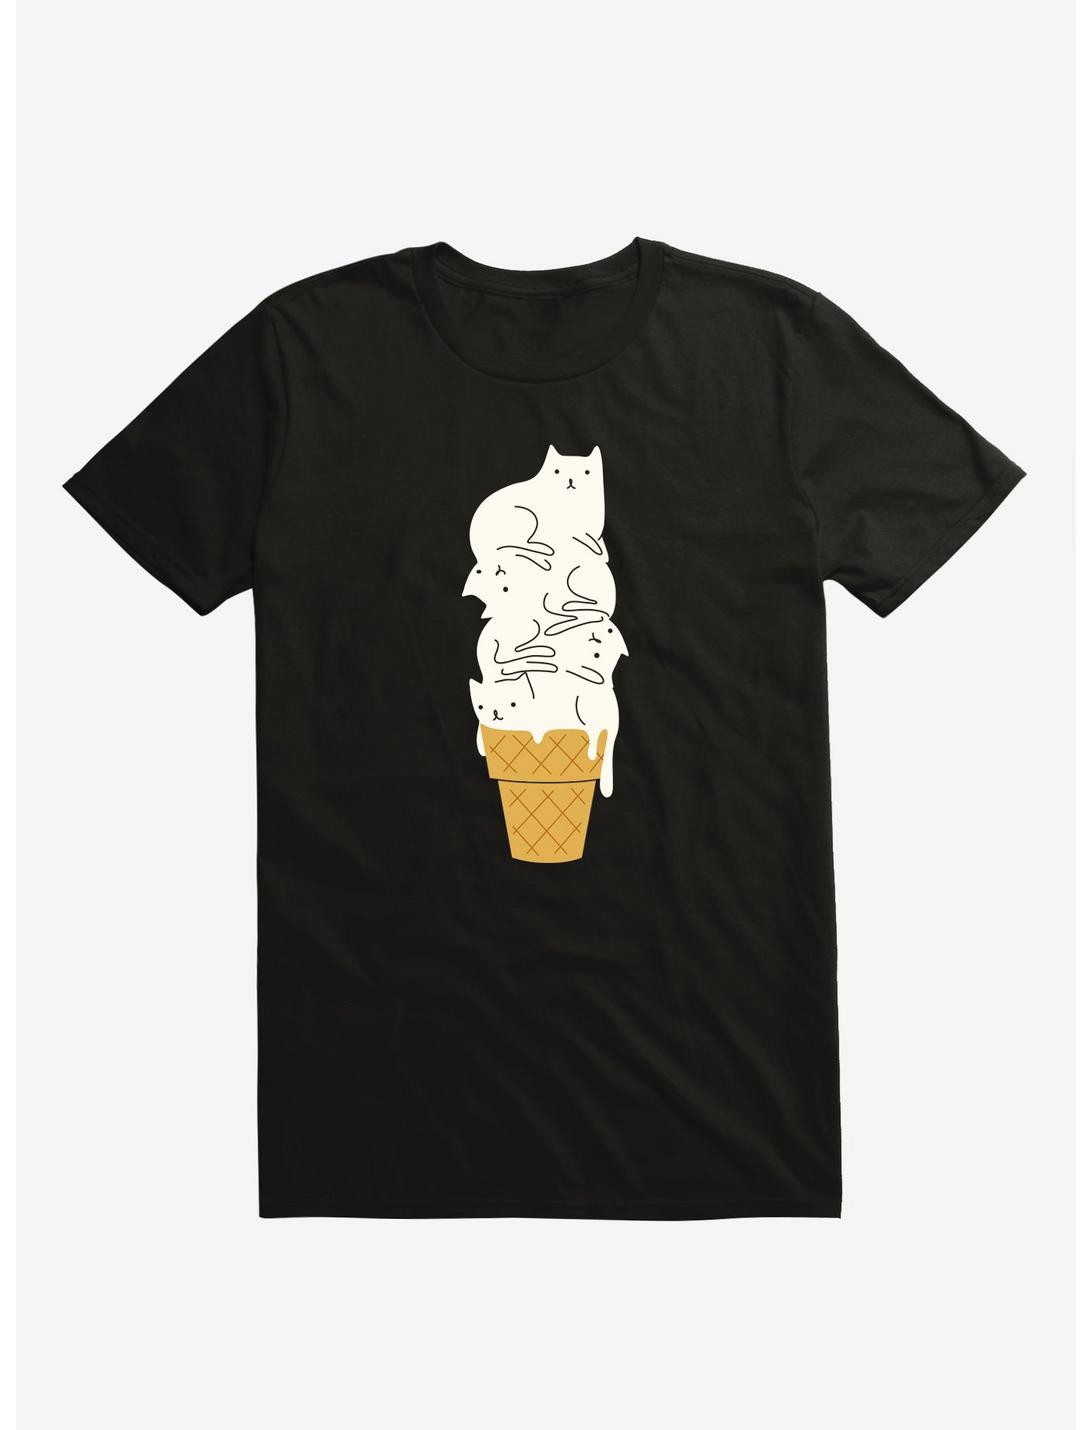 Meowlting Ice Cream Cats Black T-Shirt, BLACK, hi-res